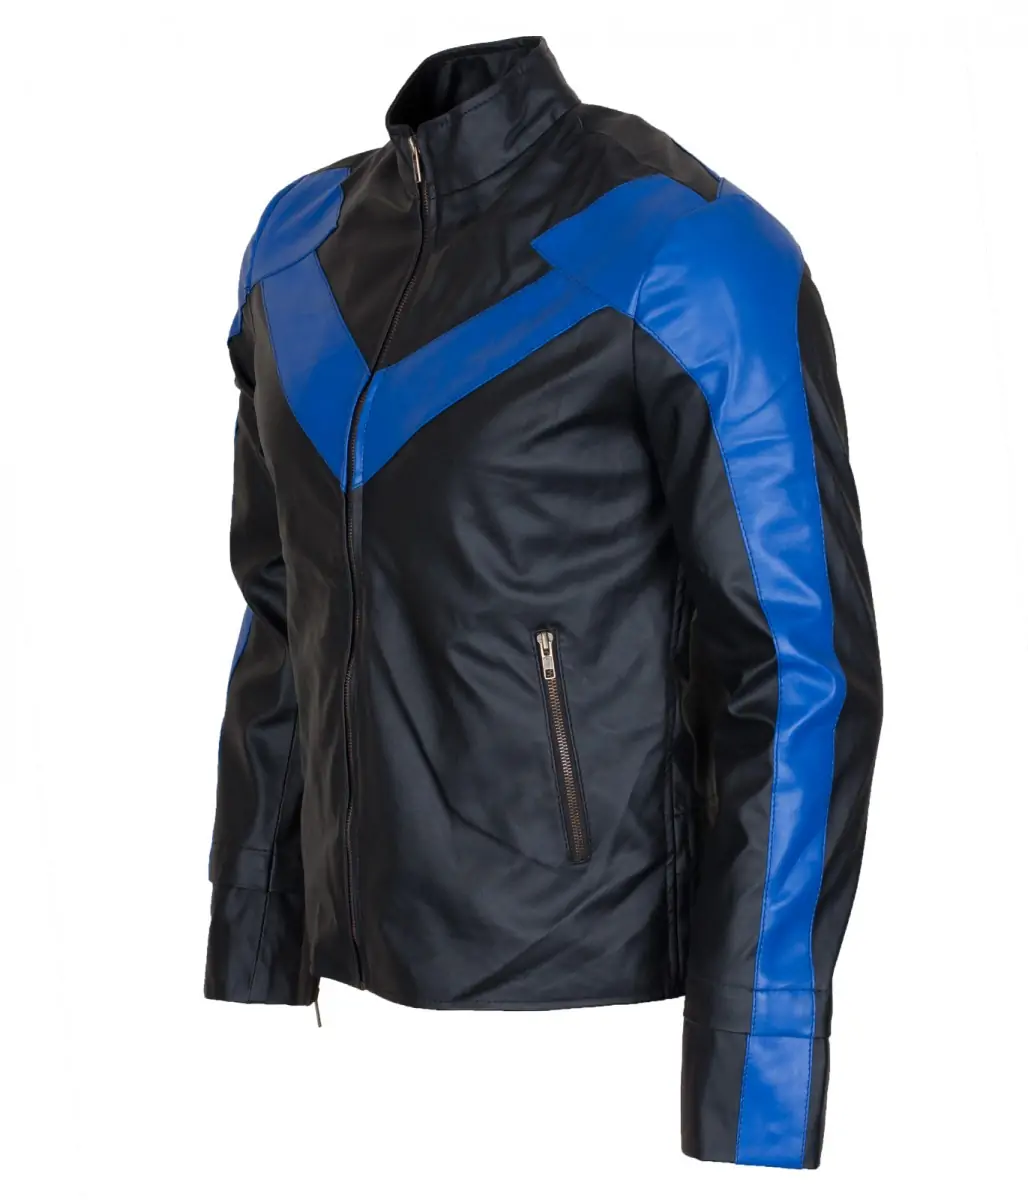 Nightwing Motorbike Leather Jacket